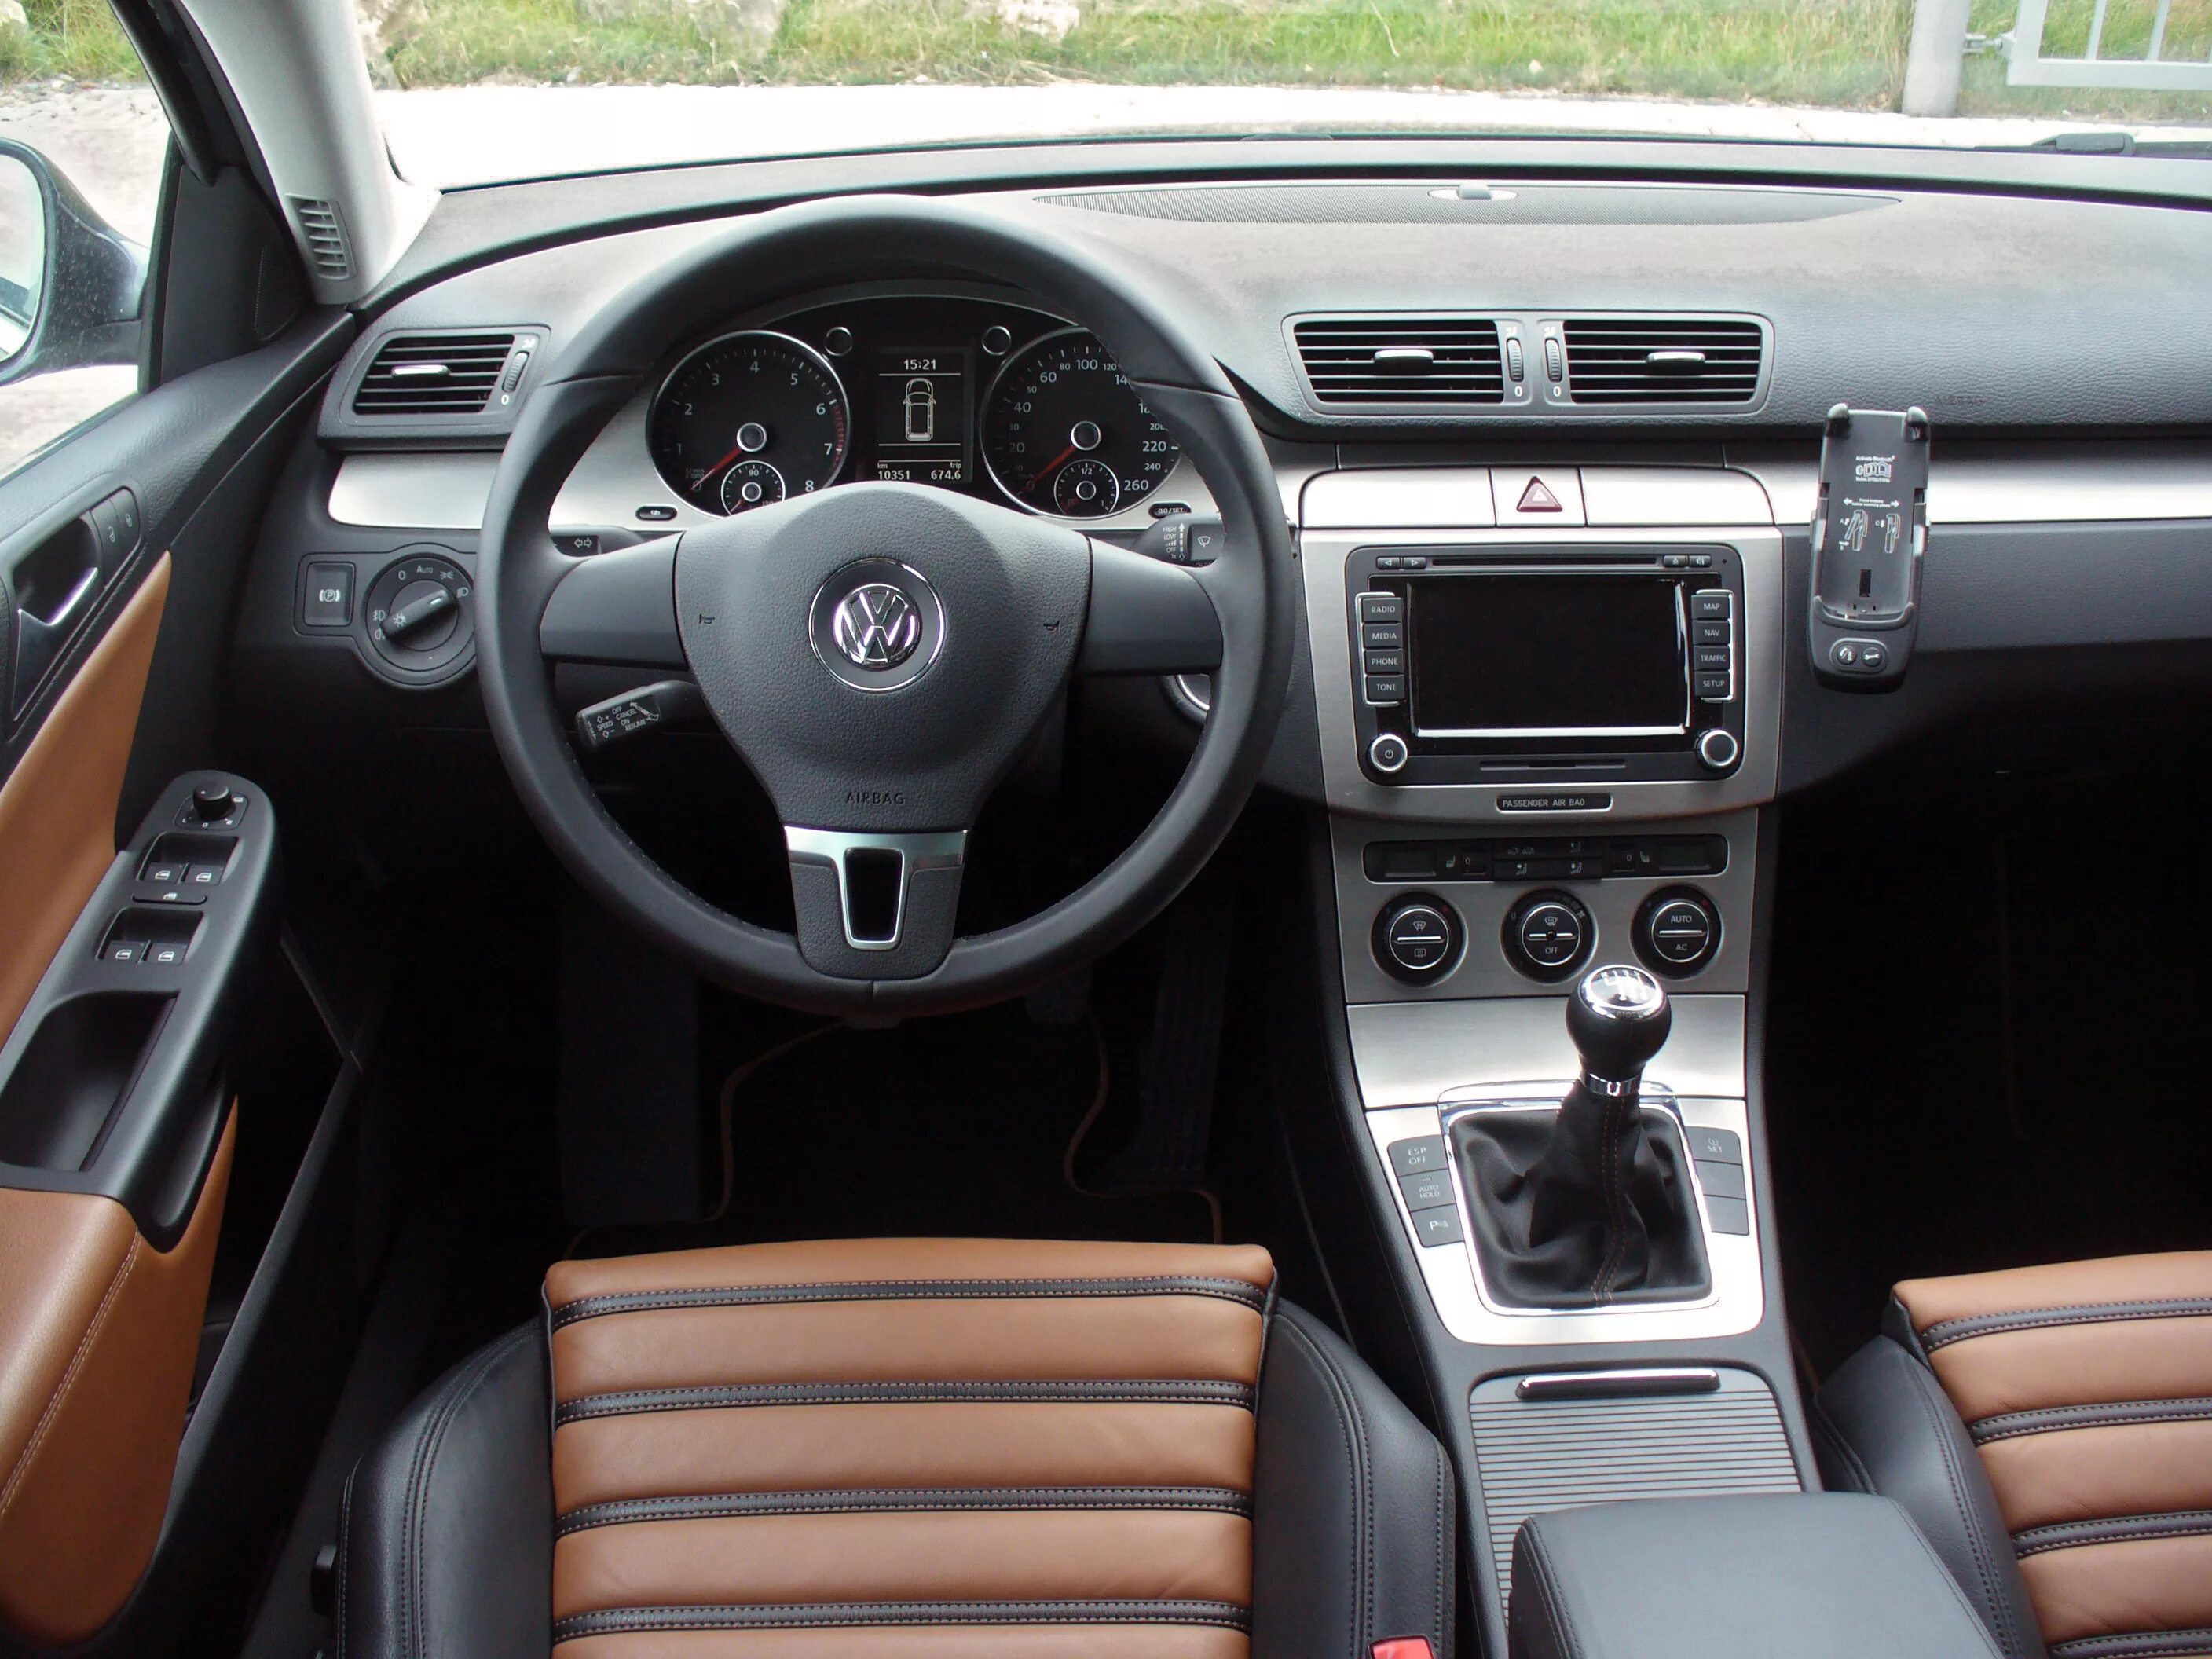 Пассат б6 2.0 автомат. Фольксваген Пассат b6 салон. Volkswagen Passat b6 Interior. Volkswagen Passat b6 салон. Фольксваген Пассат б6 2007 салон.